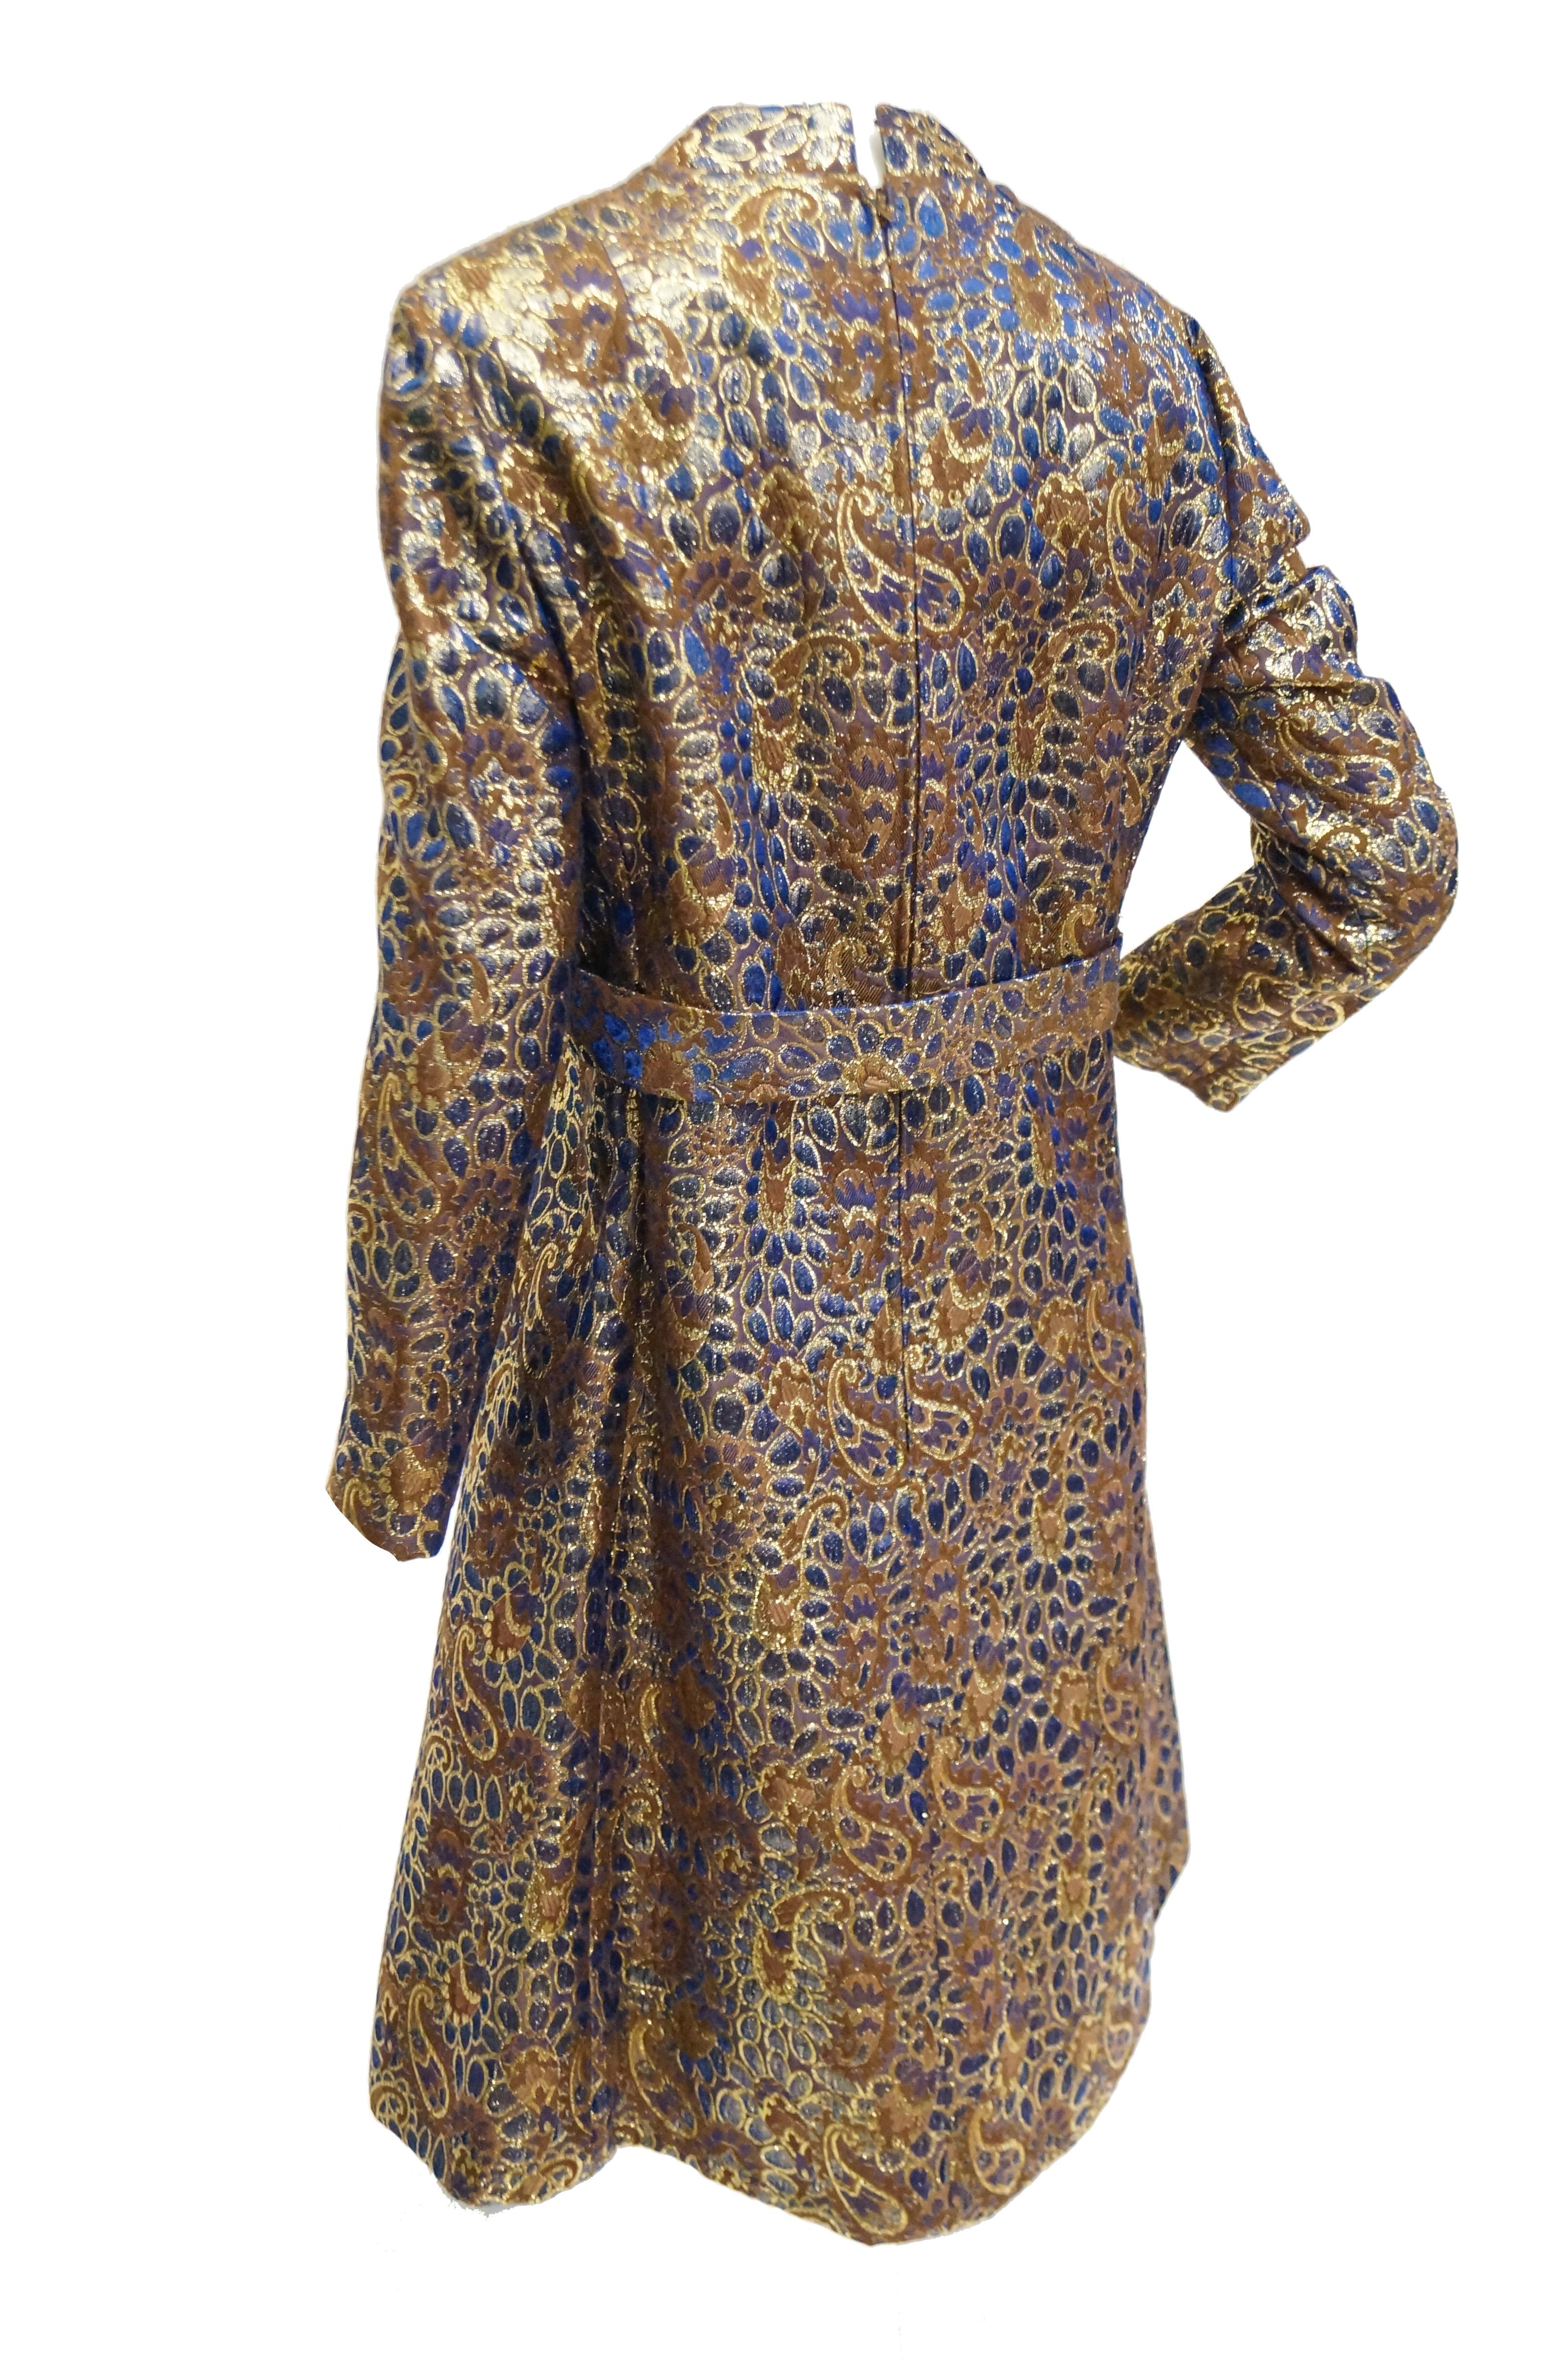 1960s Iridescent Blue and Brown Floral Brocade Mod Dress 3